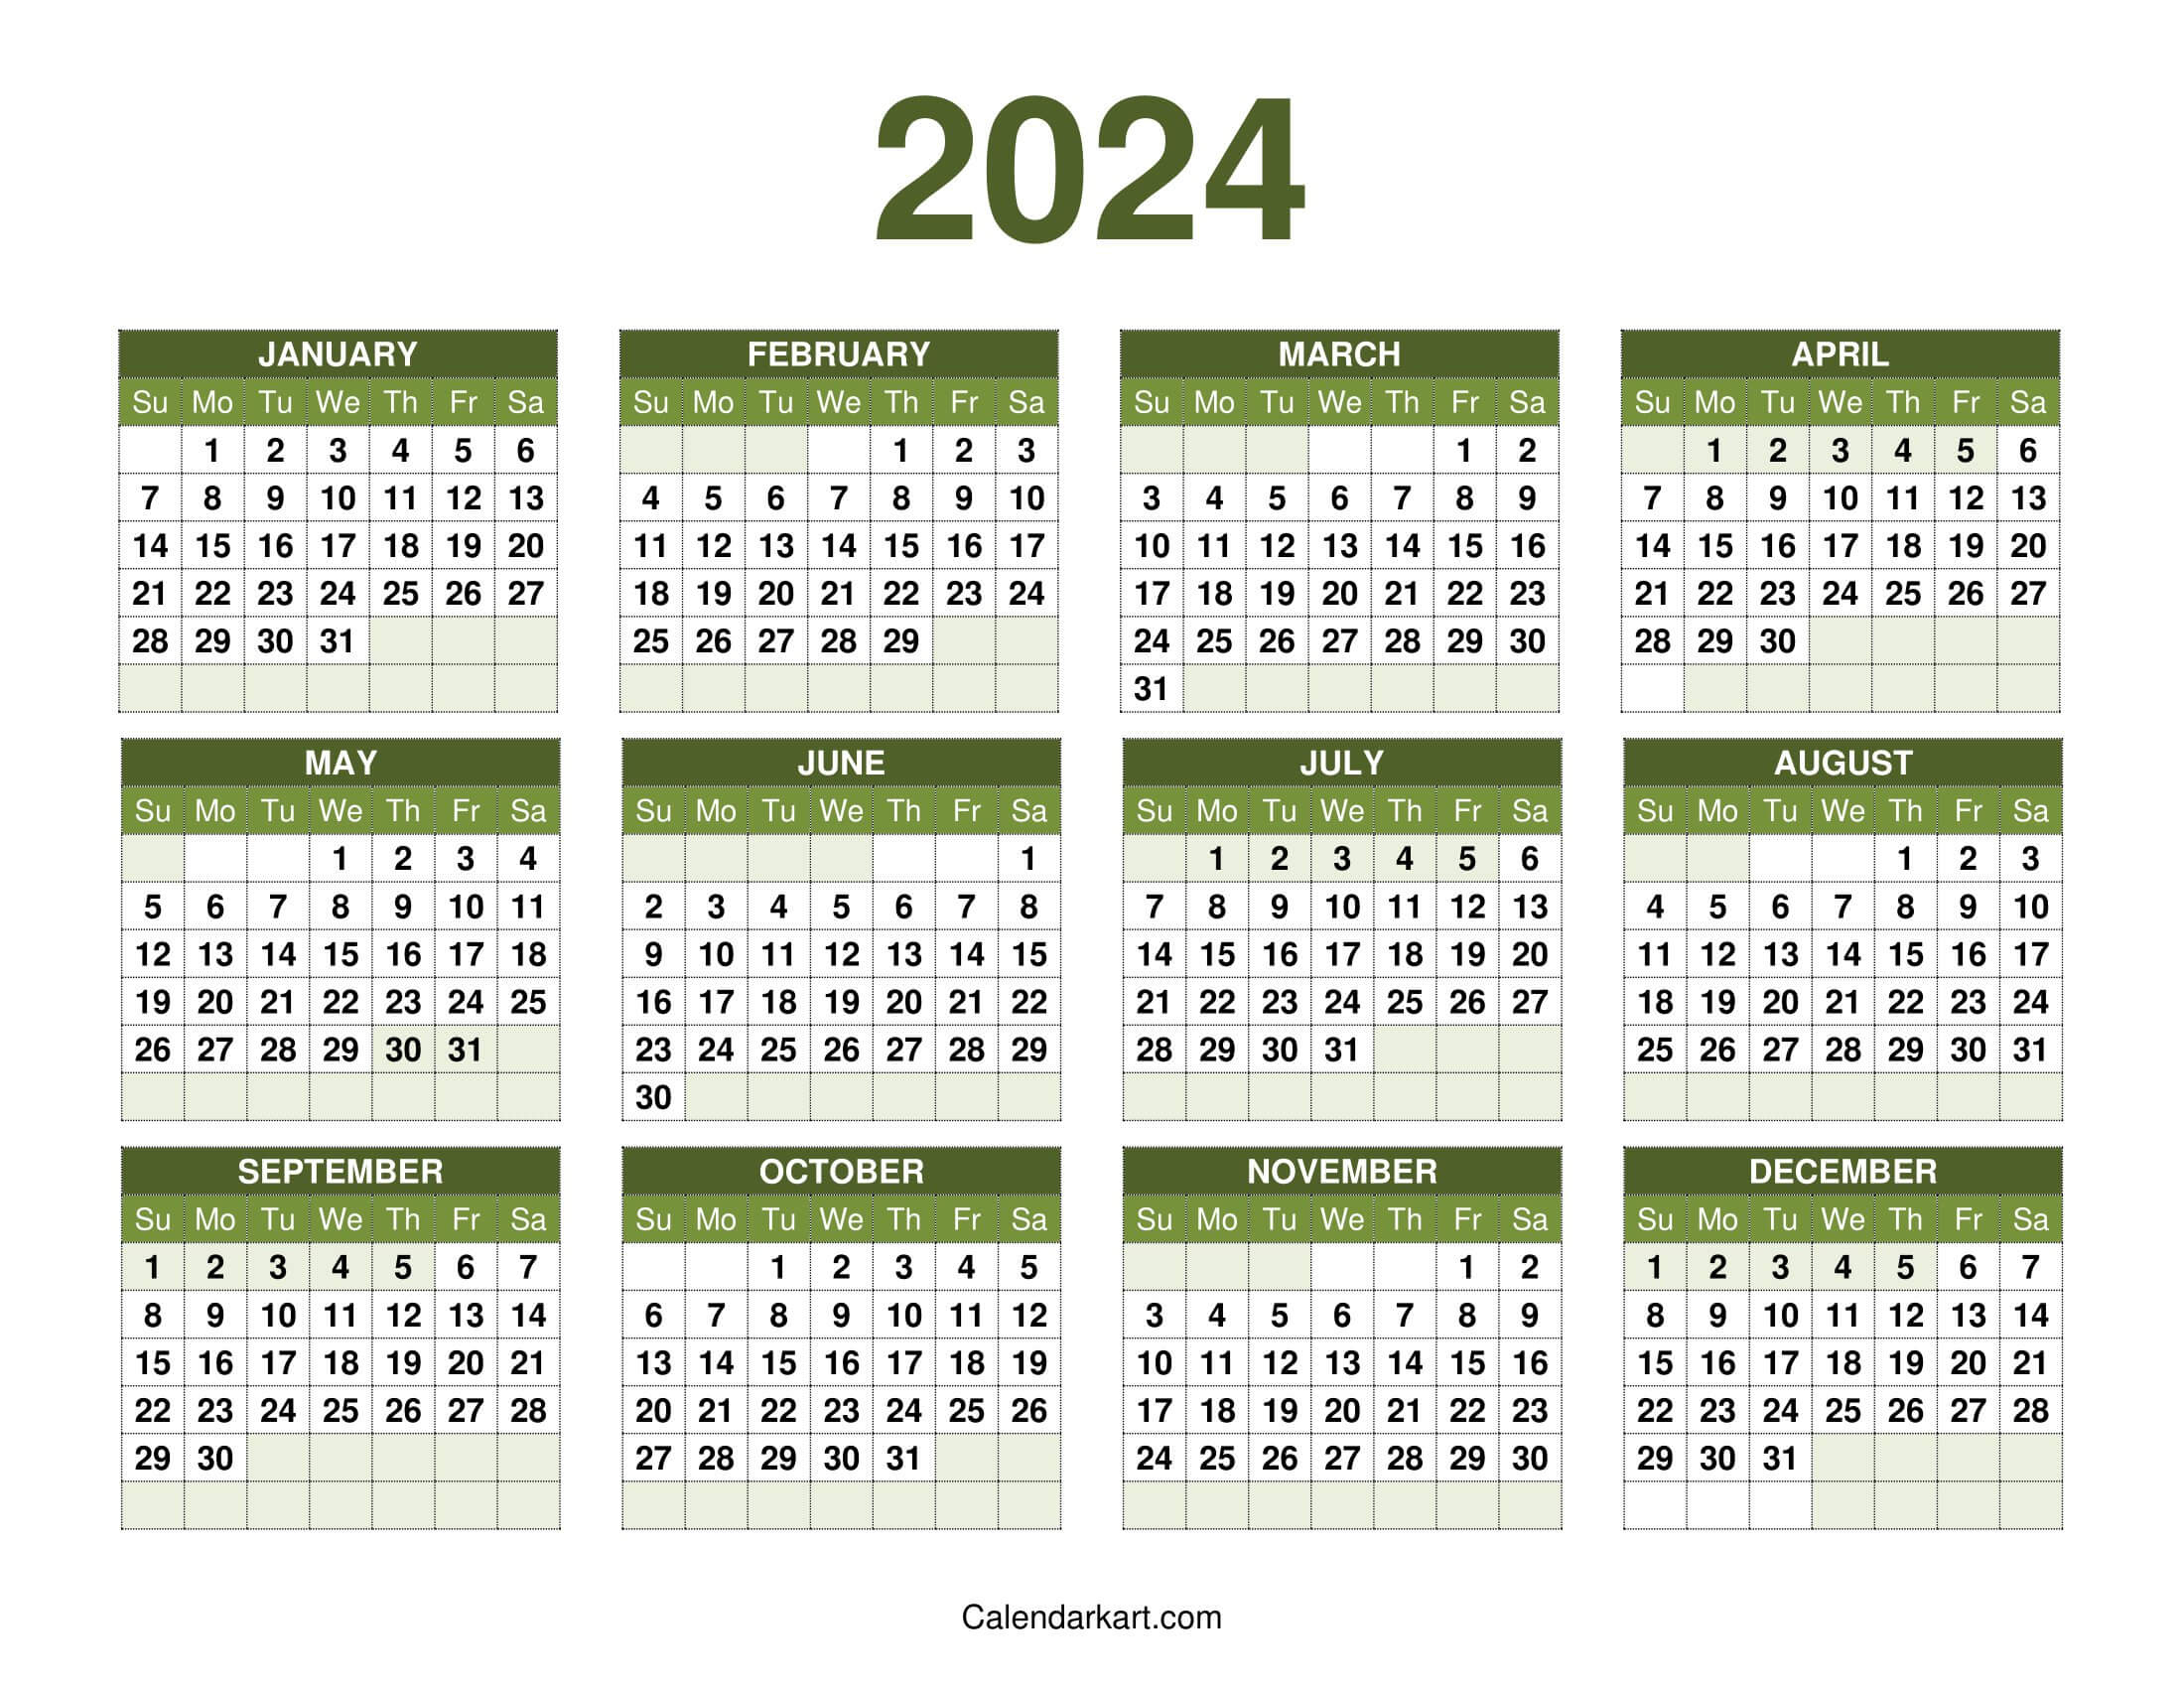 Free Printable Year At A Glance Calendar 2023-2024 - Calendarkart | Free Calendar For 2024